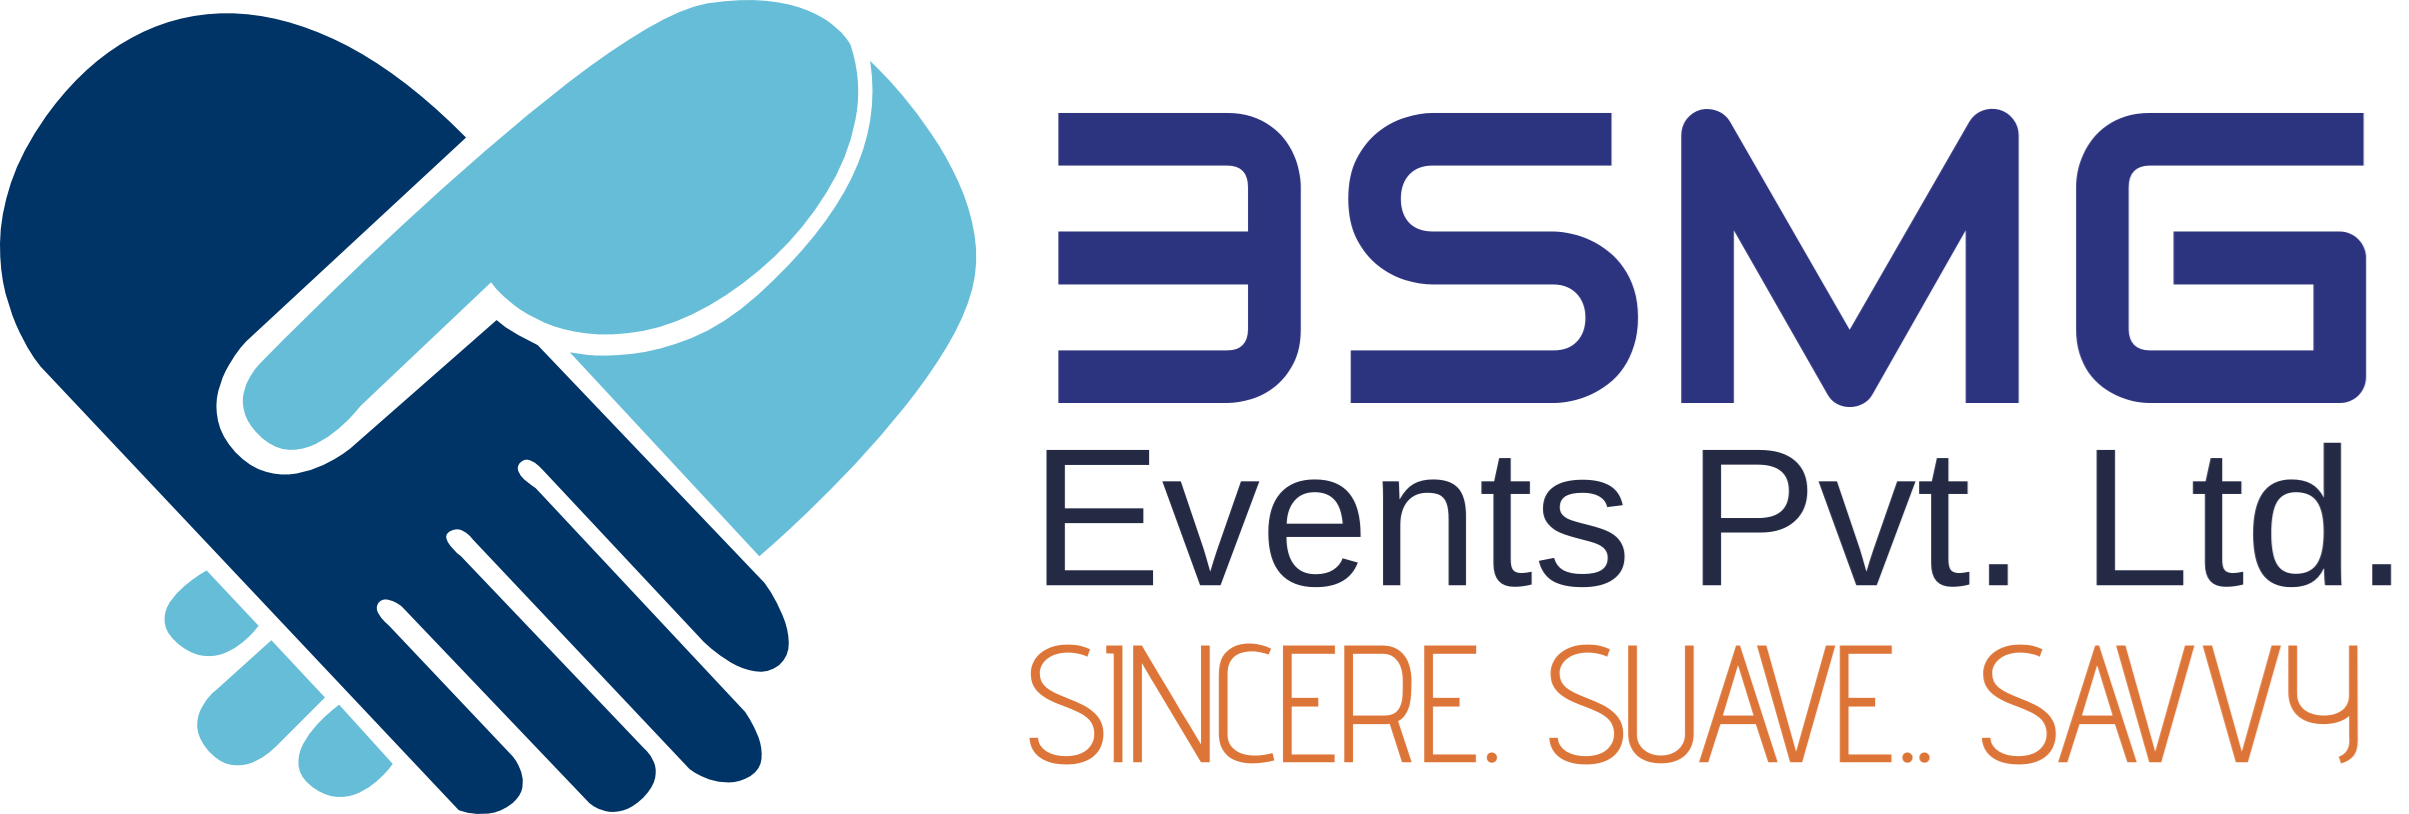 3SMG Events Pvt.Ltd.